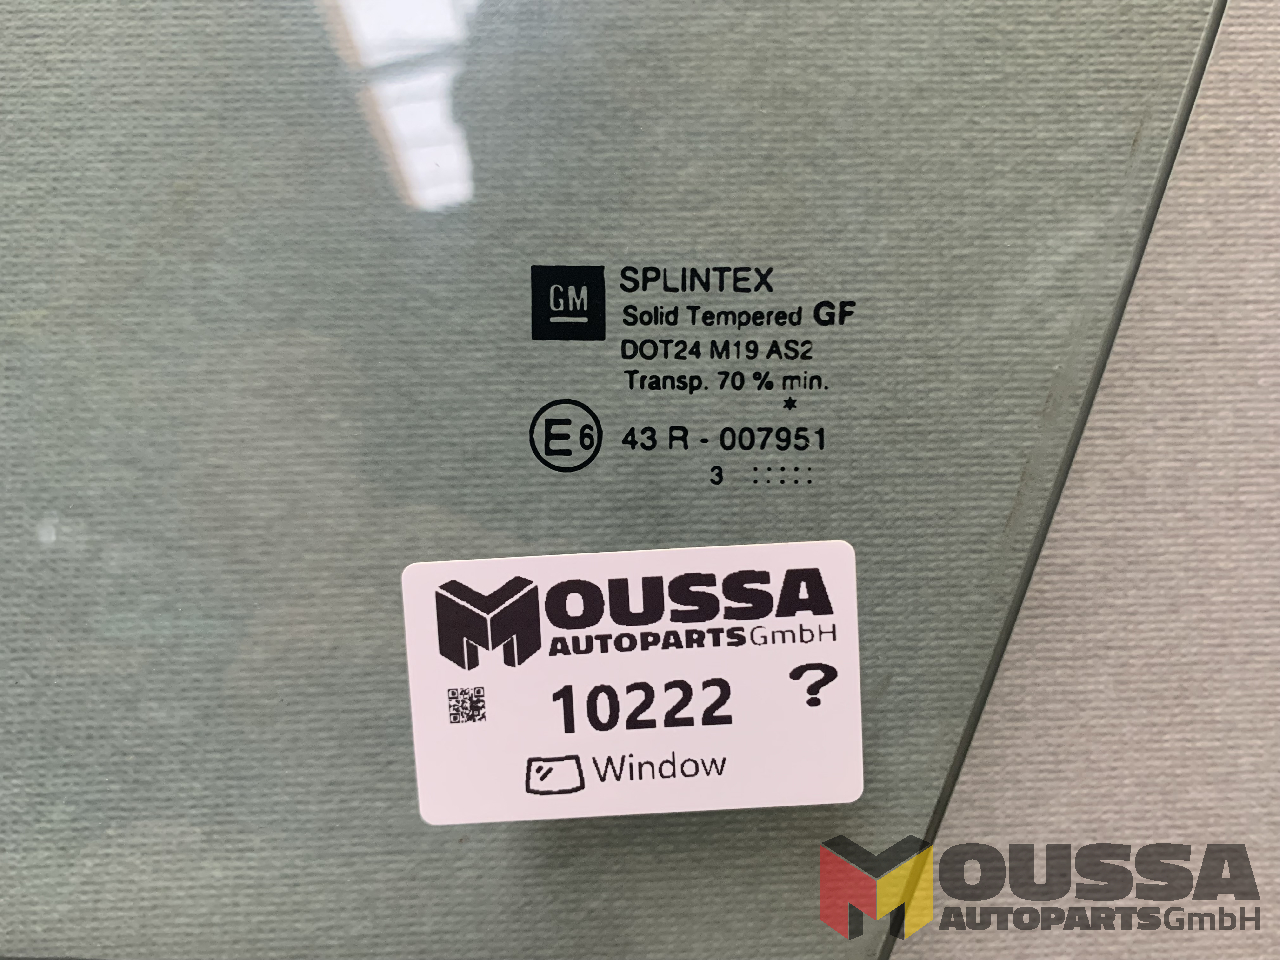 MOUSSA-AUTOPARTS-64919cf7f220f.jpg